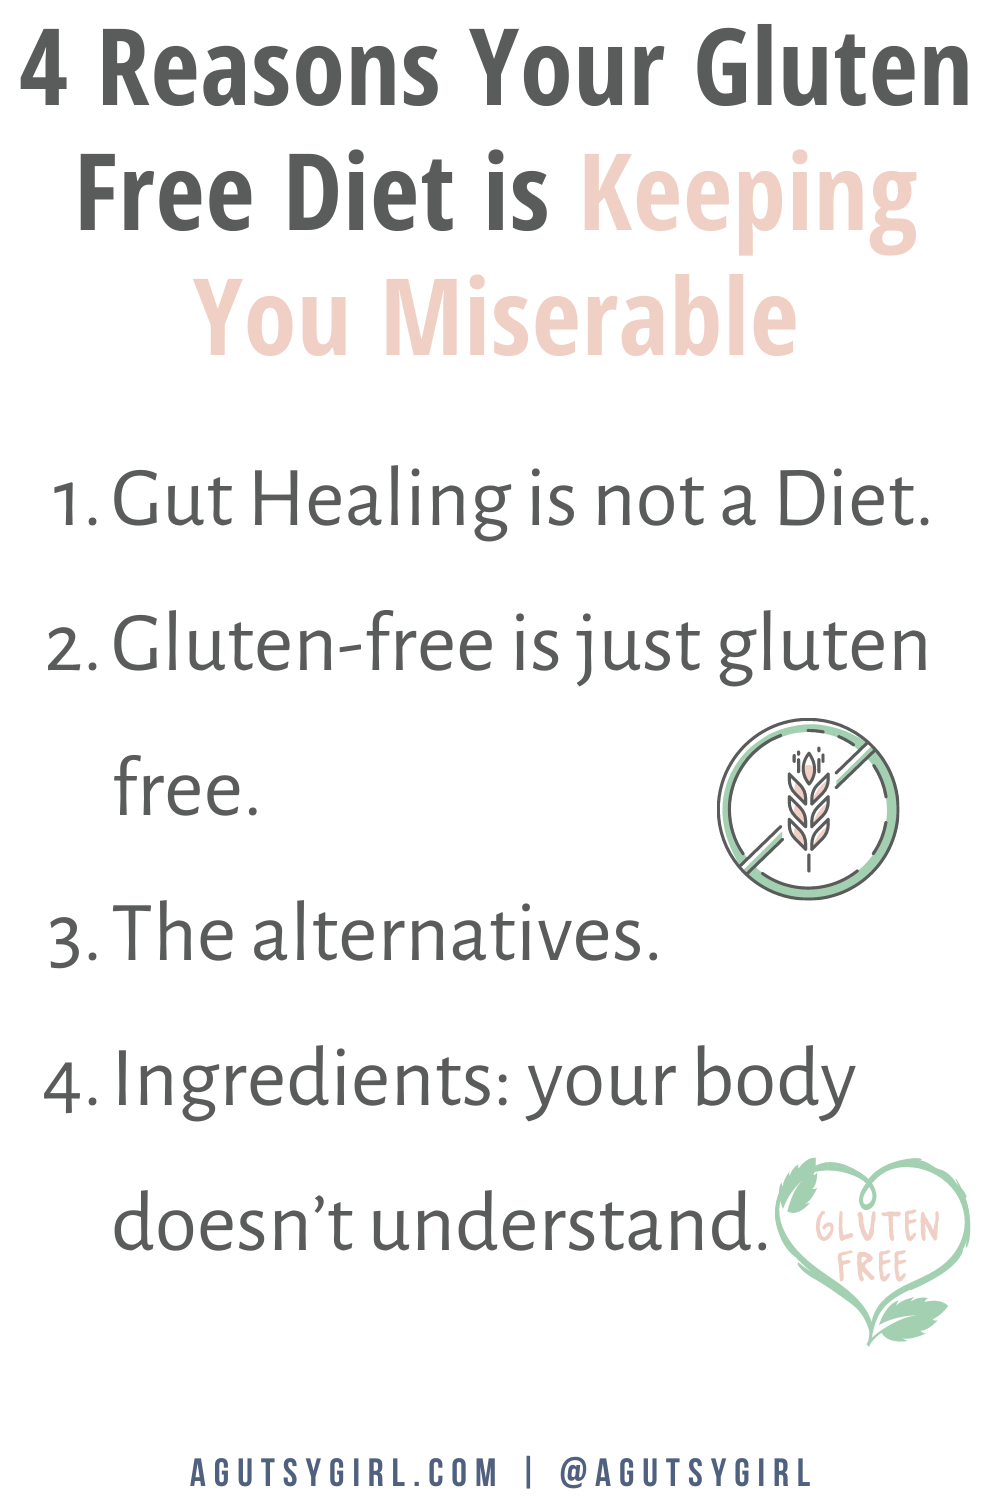 4 Reasons Your Gluten Free Diet is Keeping You Miserable agutsygirl.com #glutenfree #glutenfreediet #foodintolerance